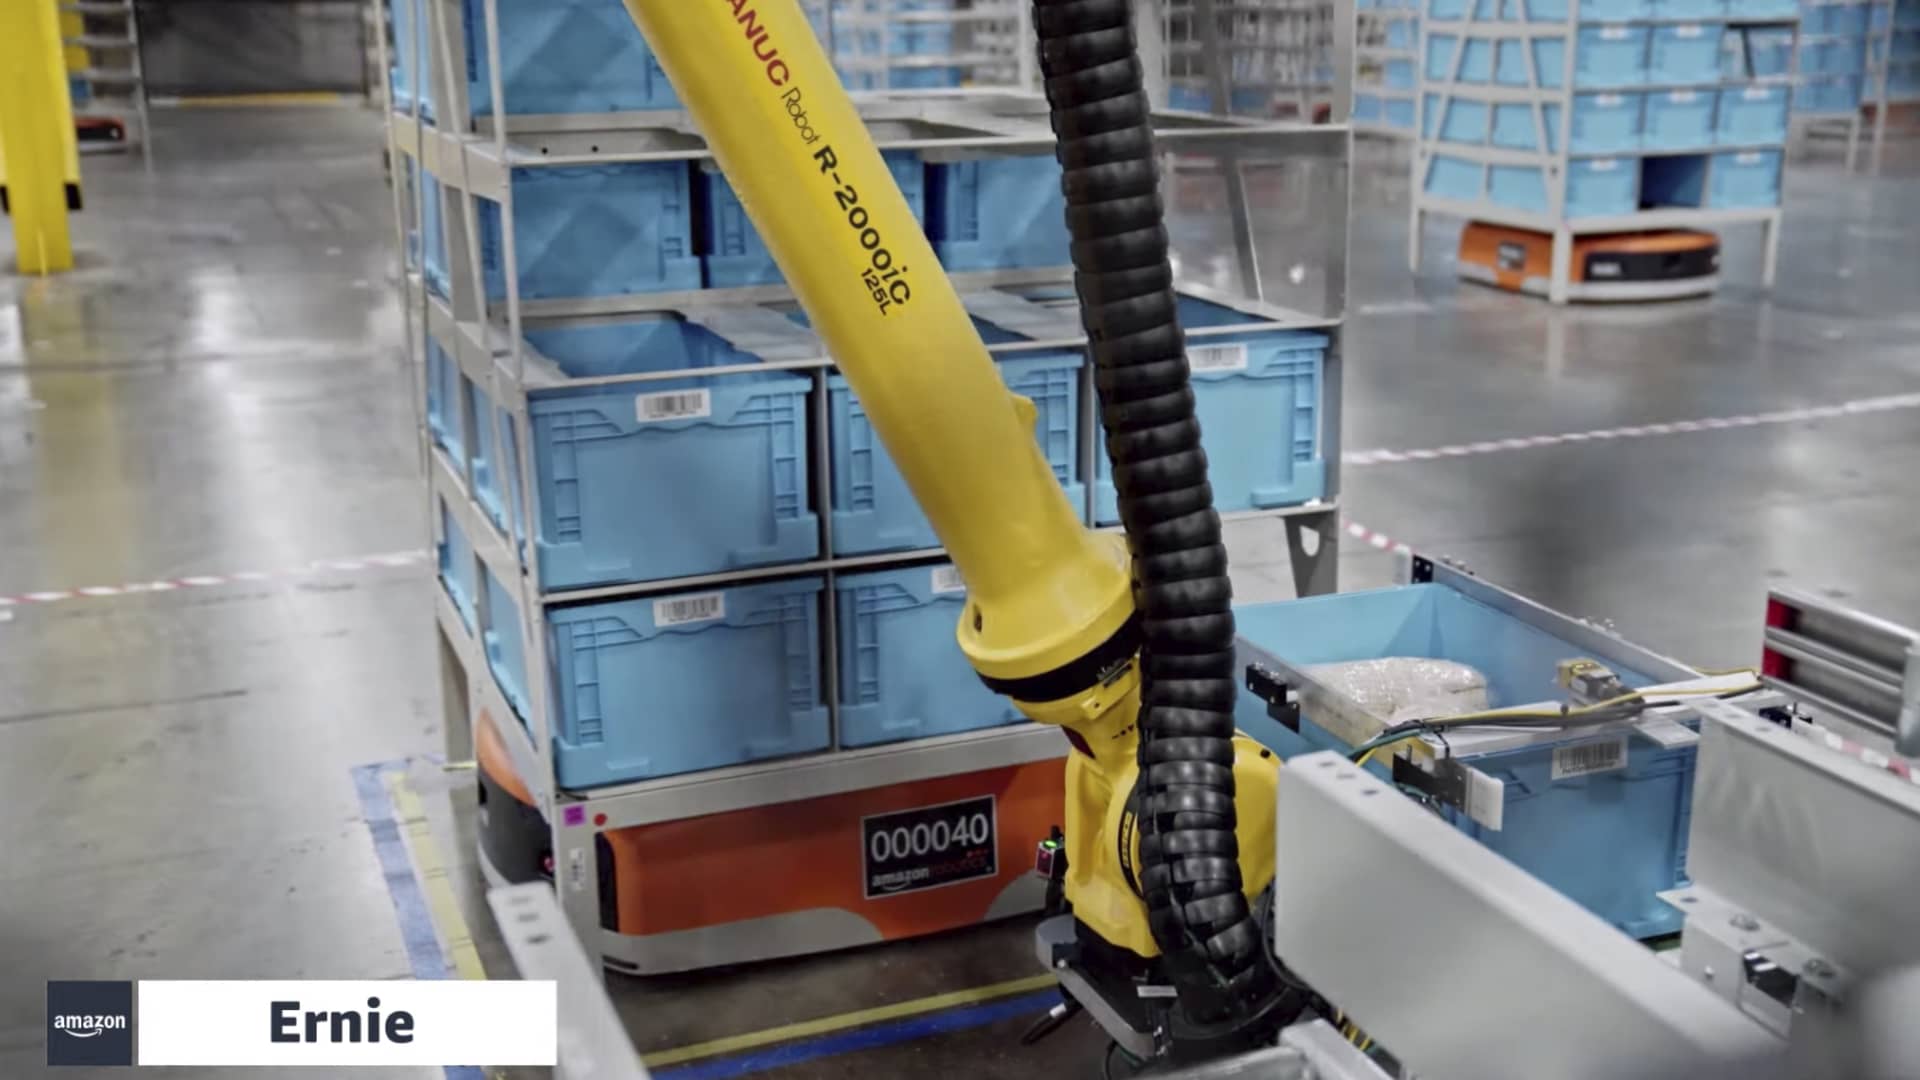 Juice konvertering lustre Amazon details new warehouse robots, 'Ernie' and 'Bert'